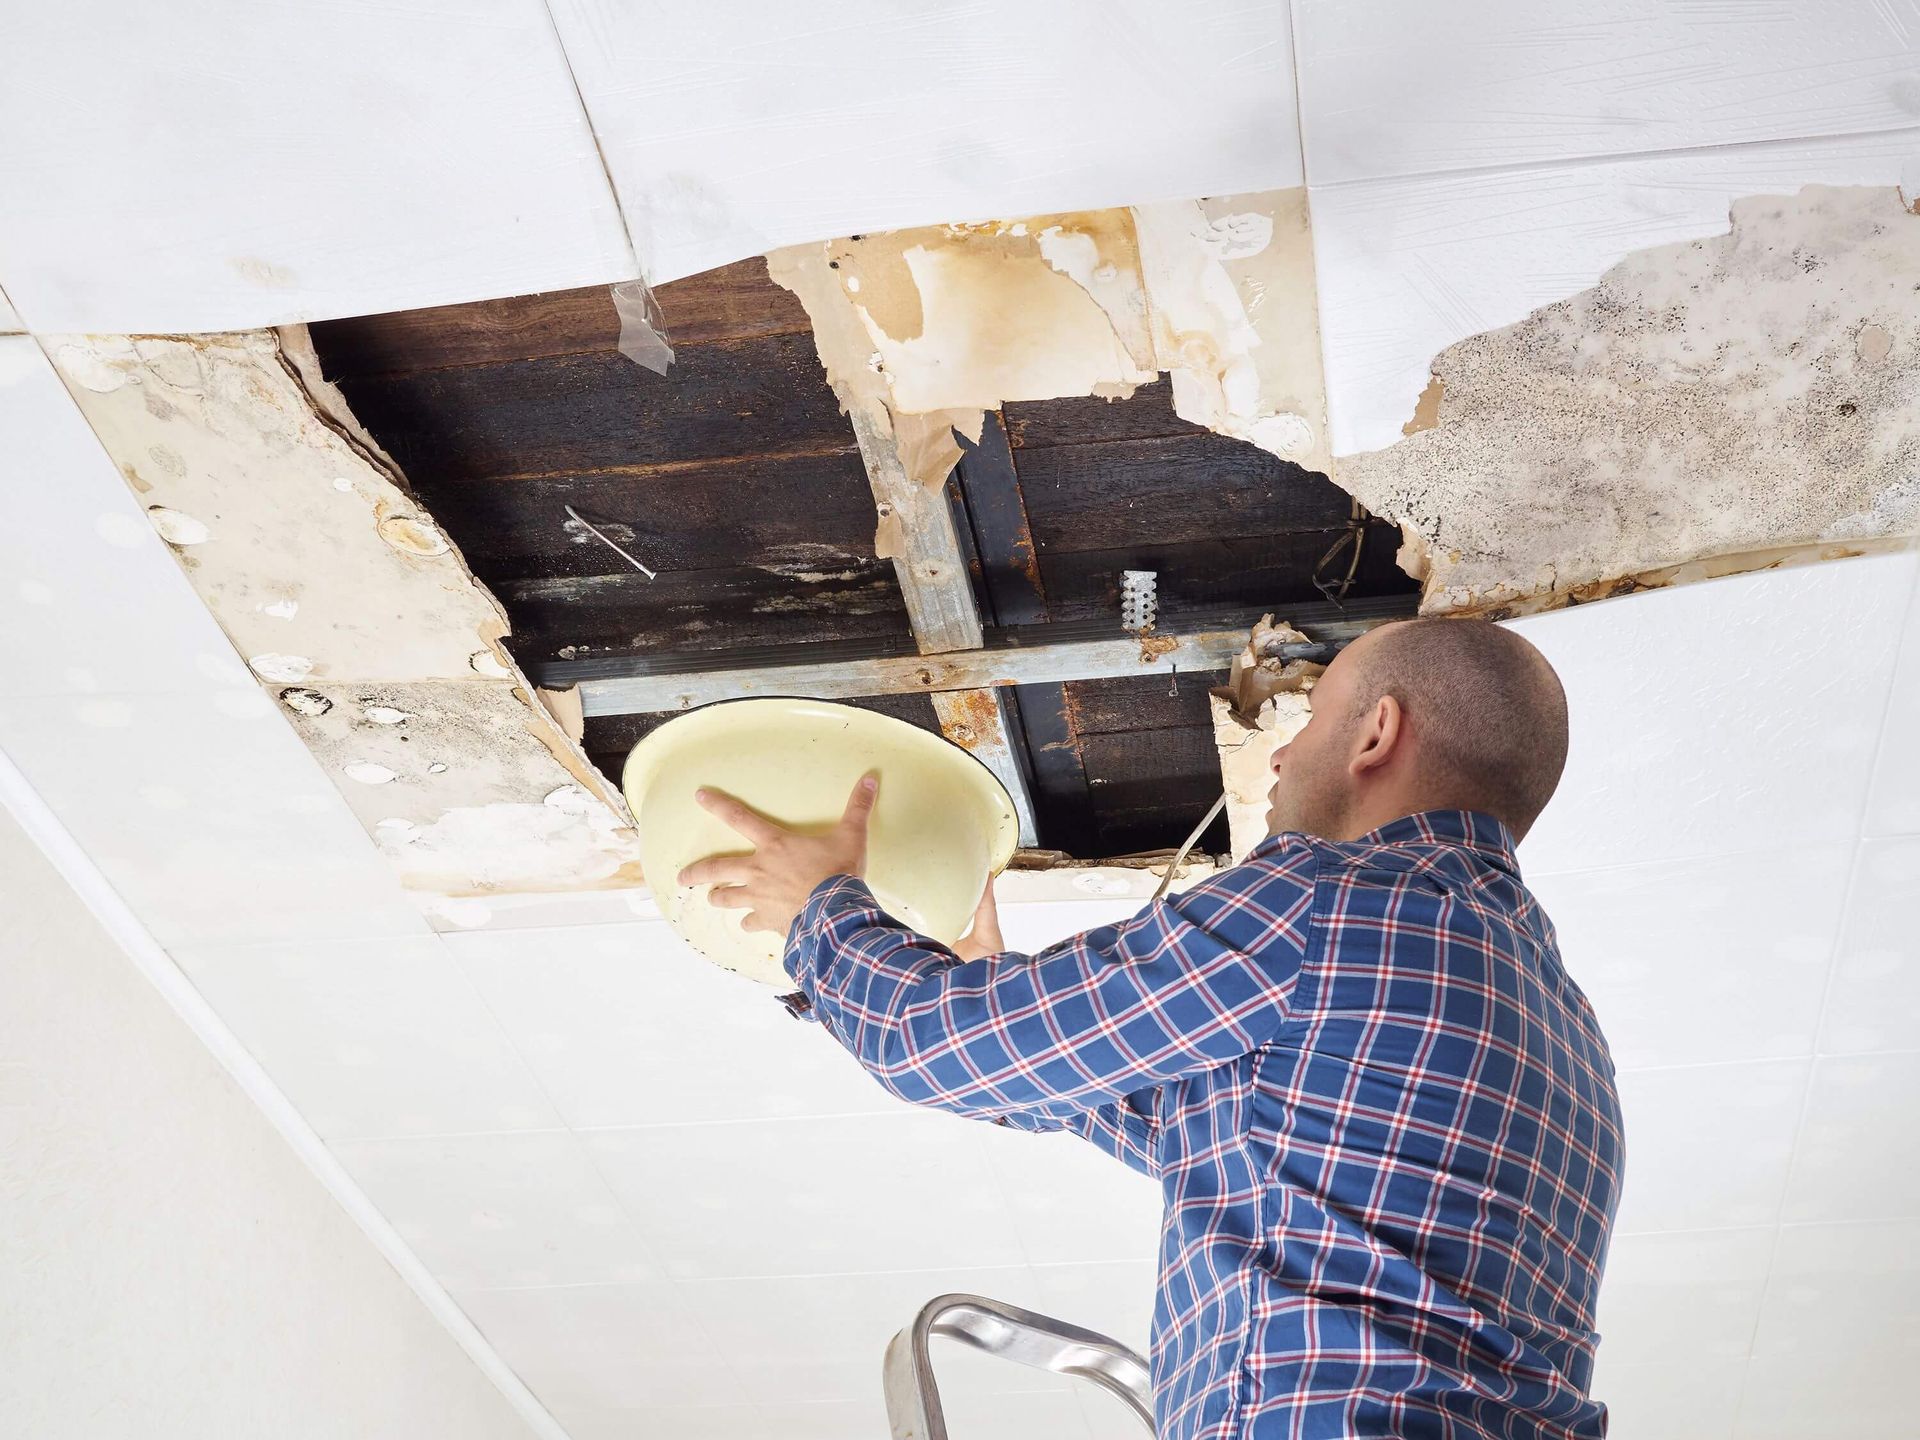 midlothian va drywall, ceiling repairs, drywall texture types, drywall richmond va